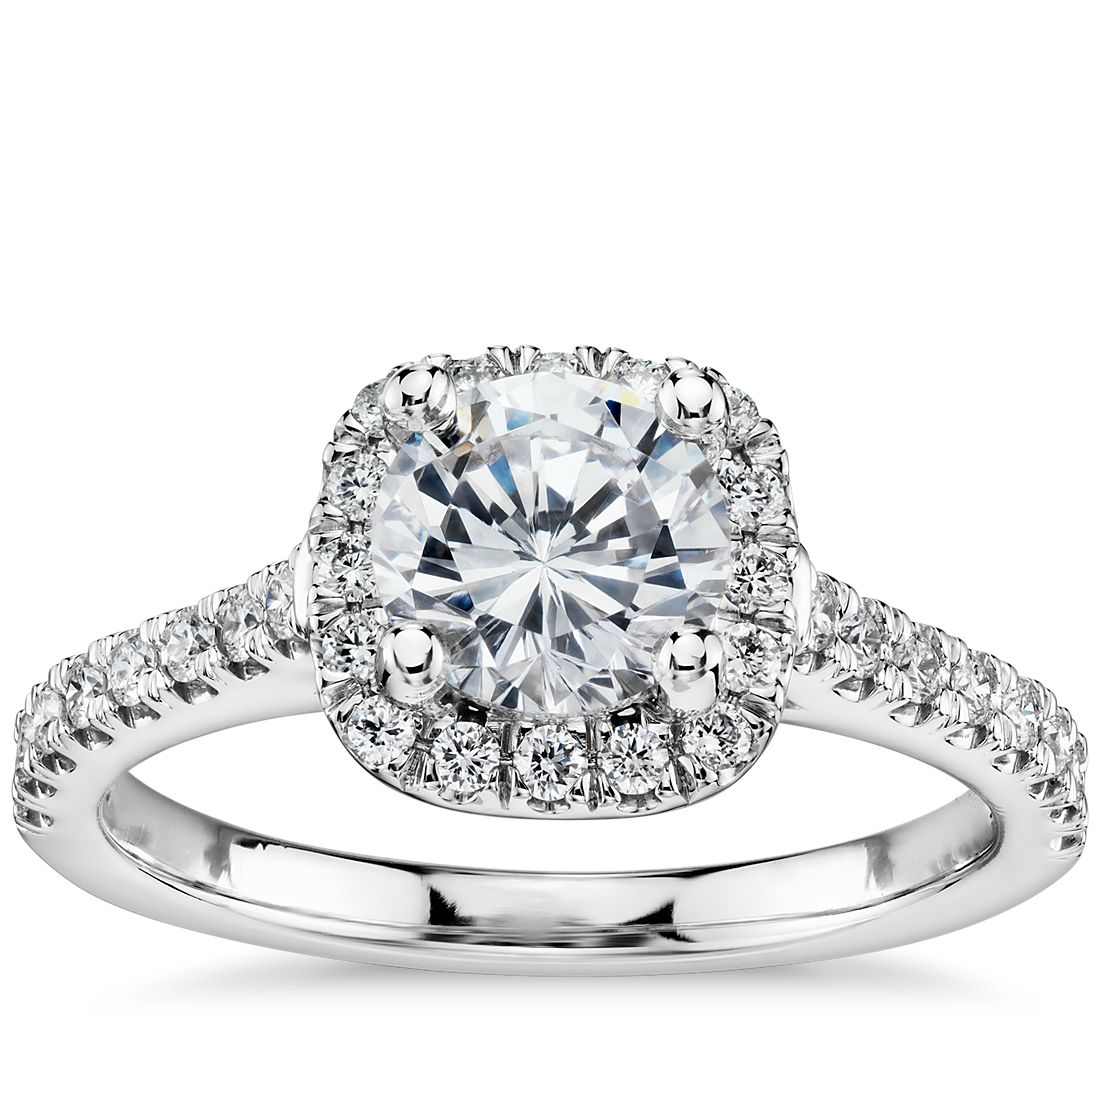 1 Carat Ready-to-Ship Cushion Halo Diamond Engagement Ring in Platinum